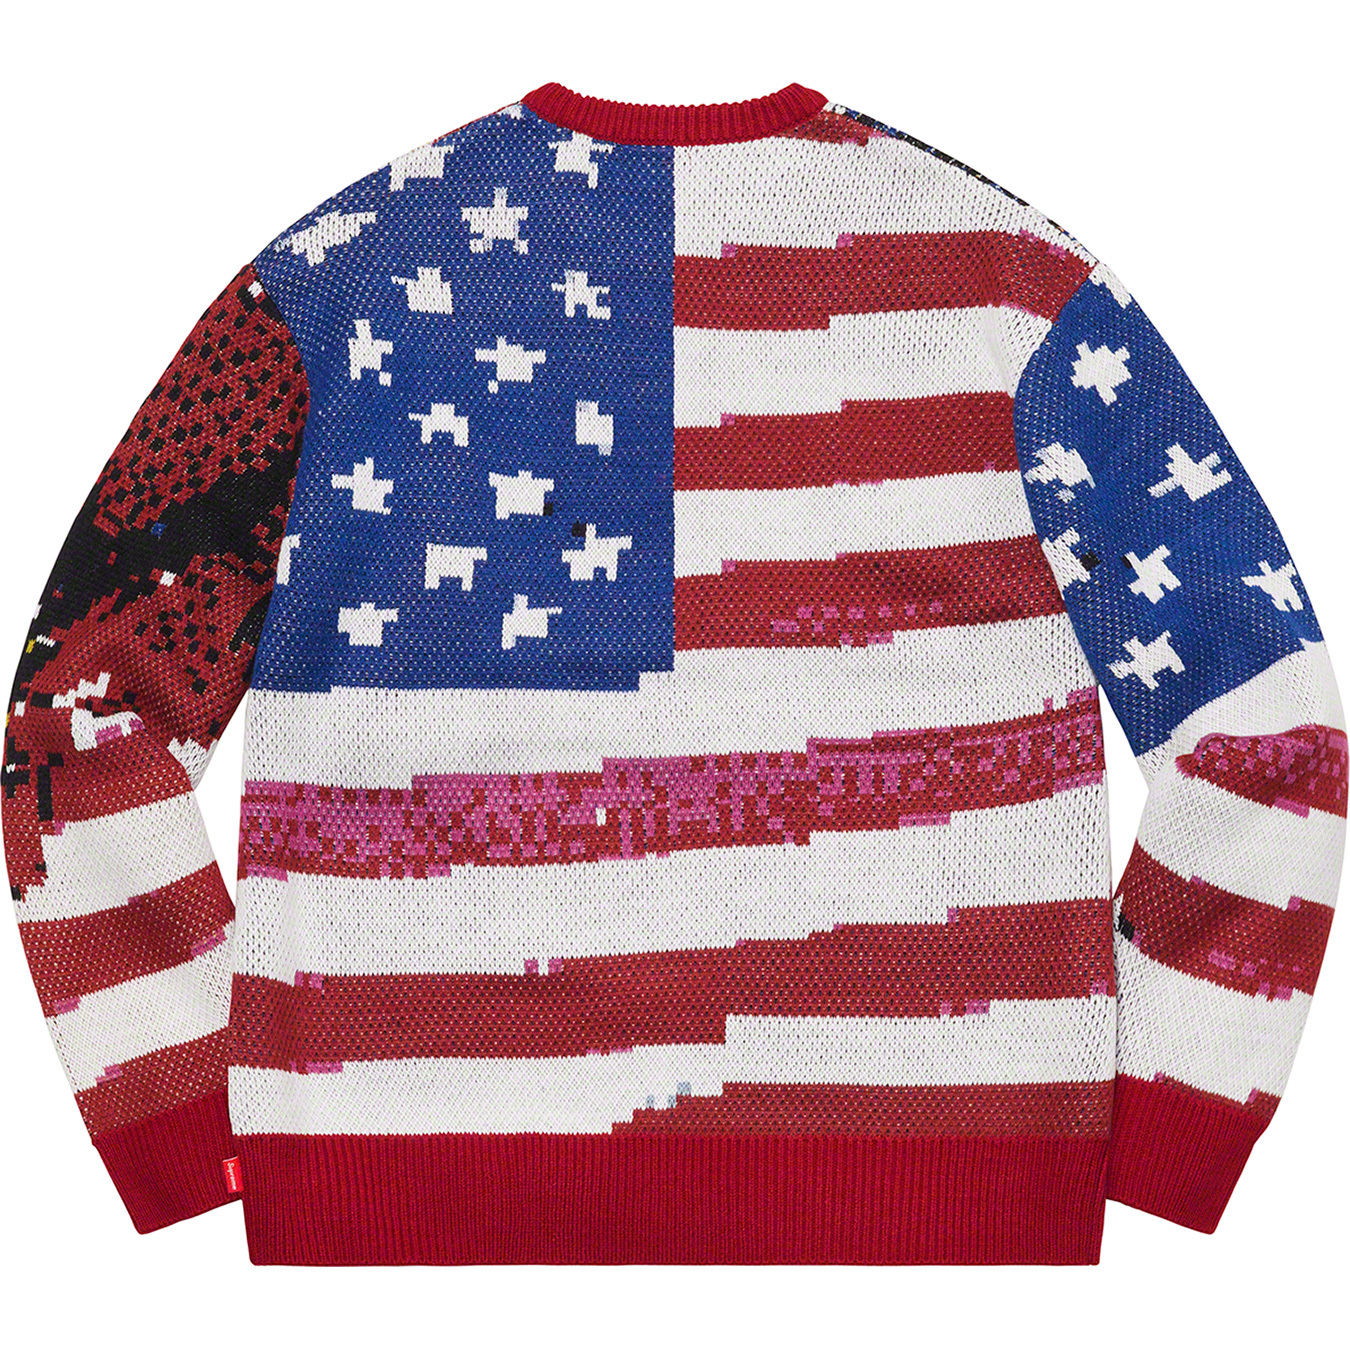 supreme Digital Flag Sweater